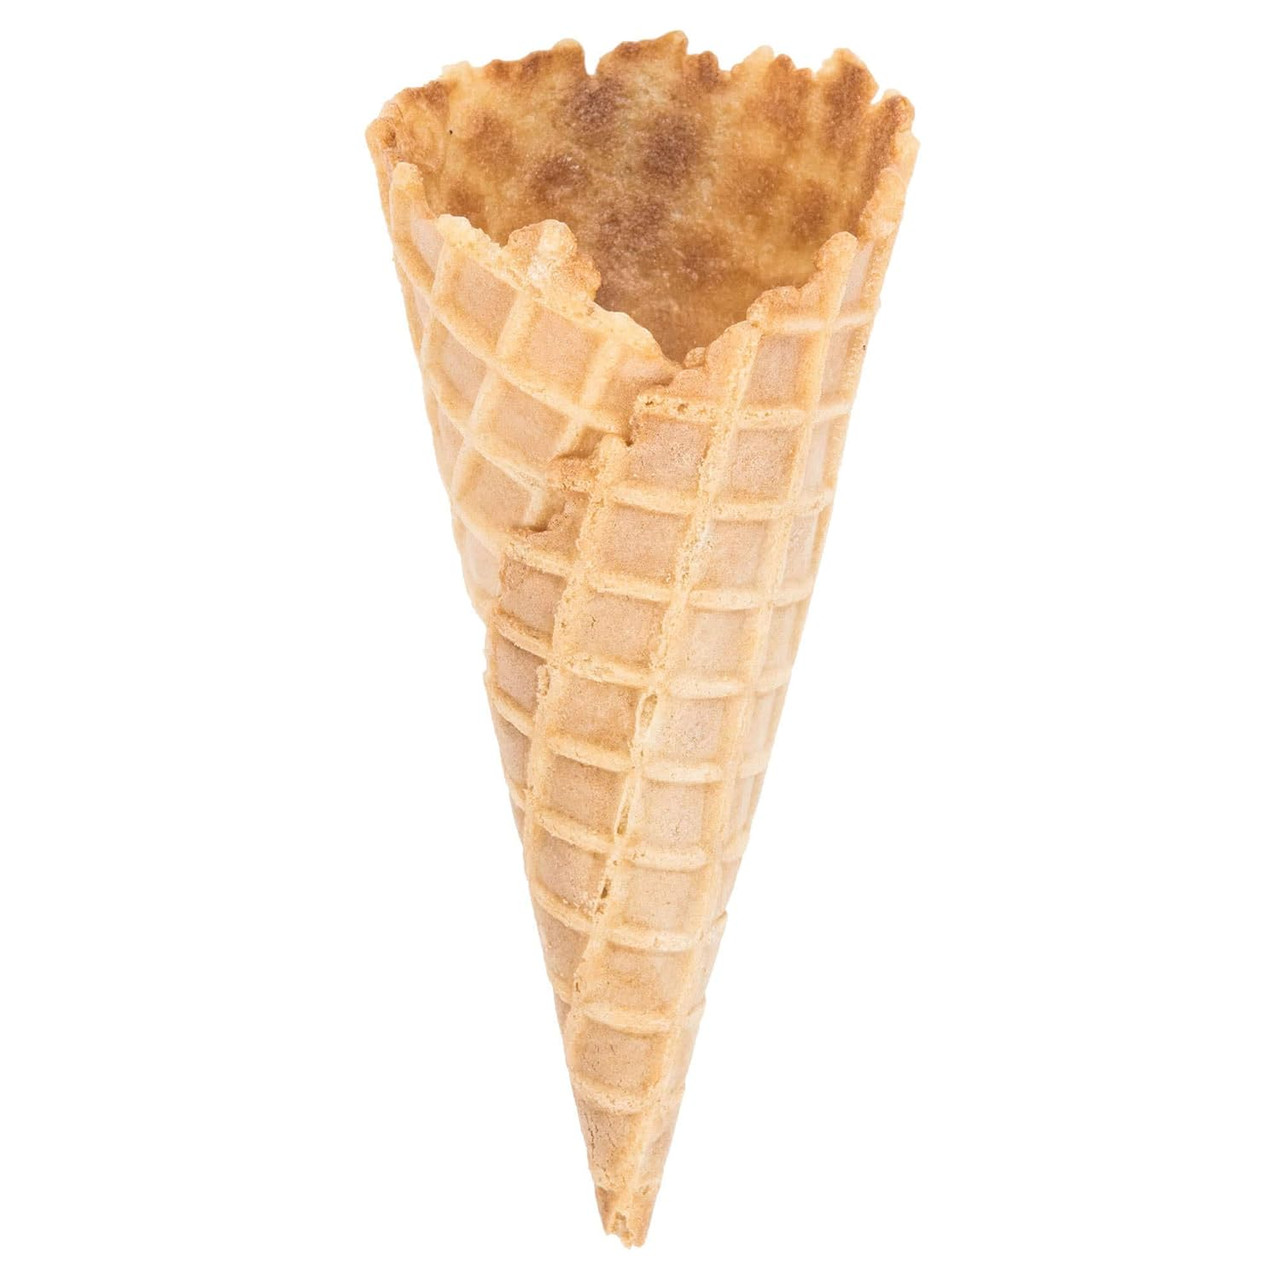 JOY 5288 Small Ice Cream Waffle Cones - 288/Case